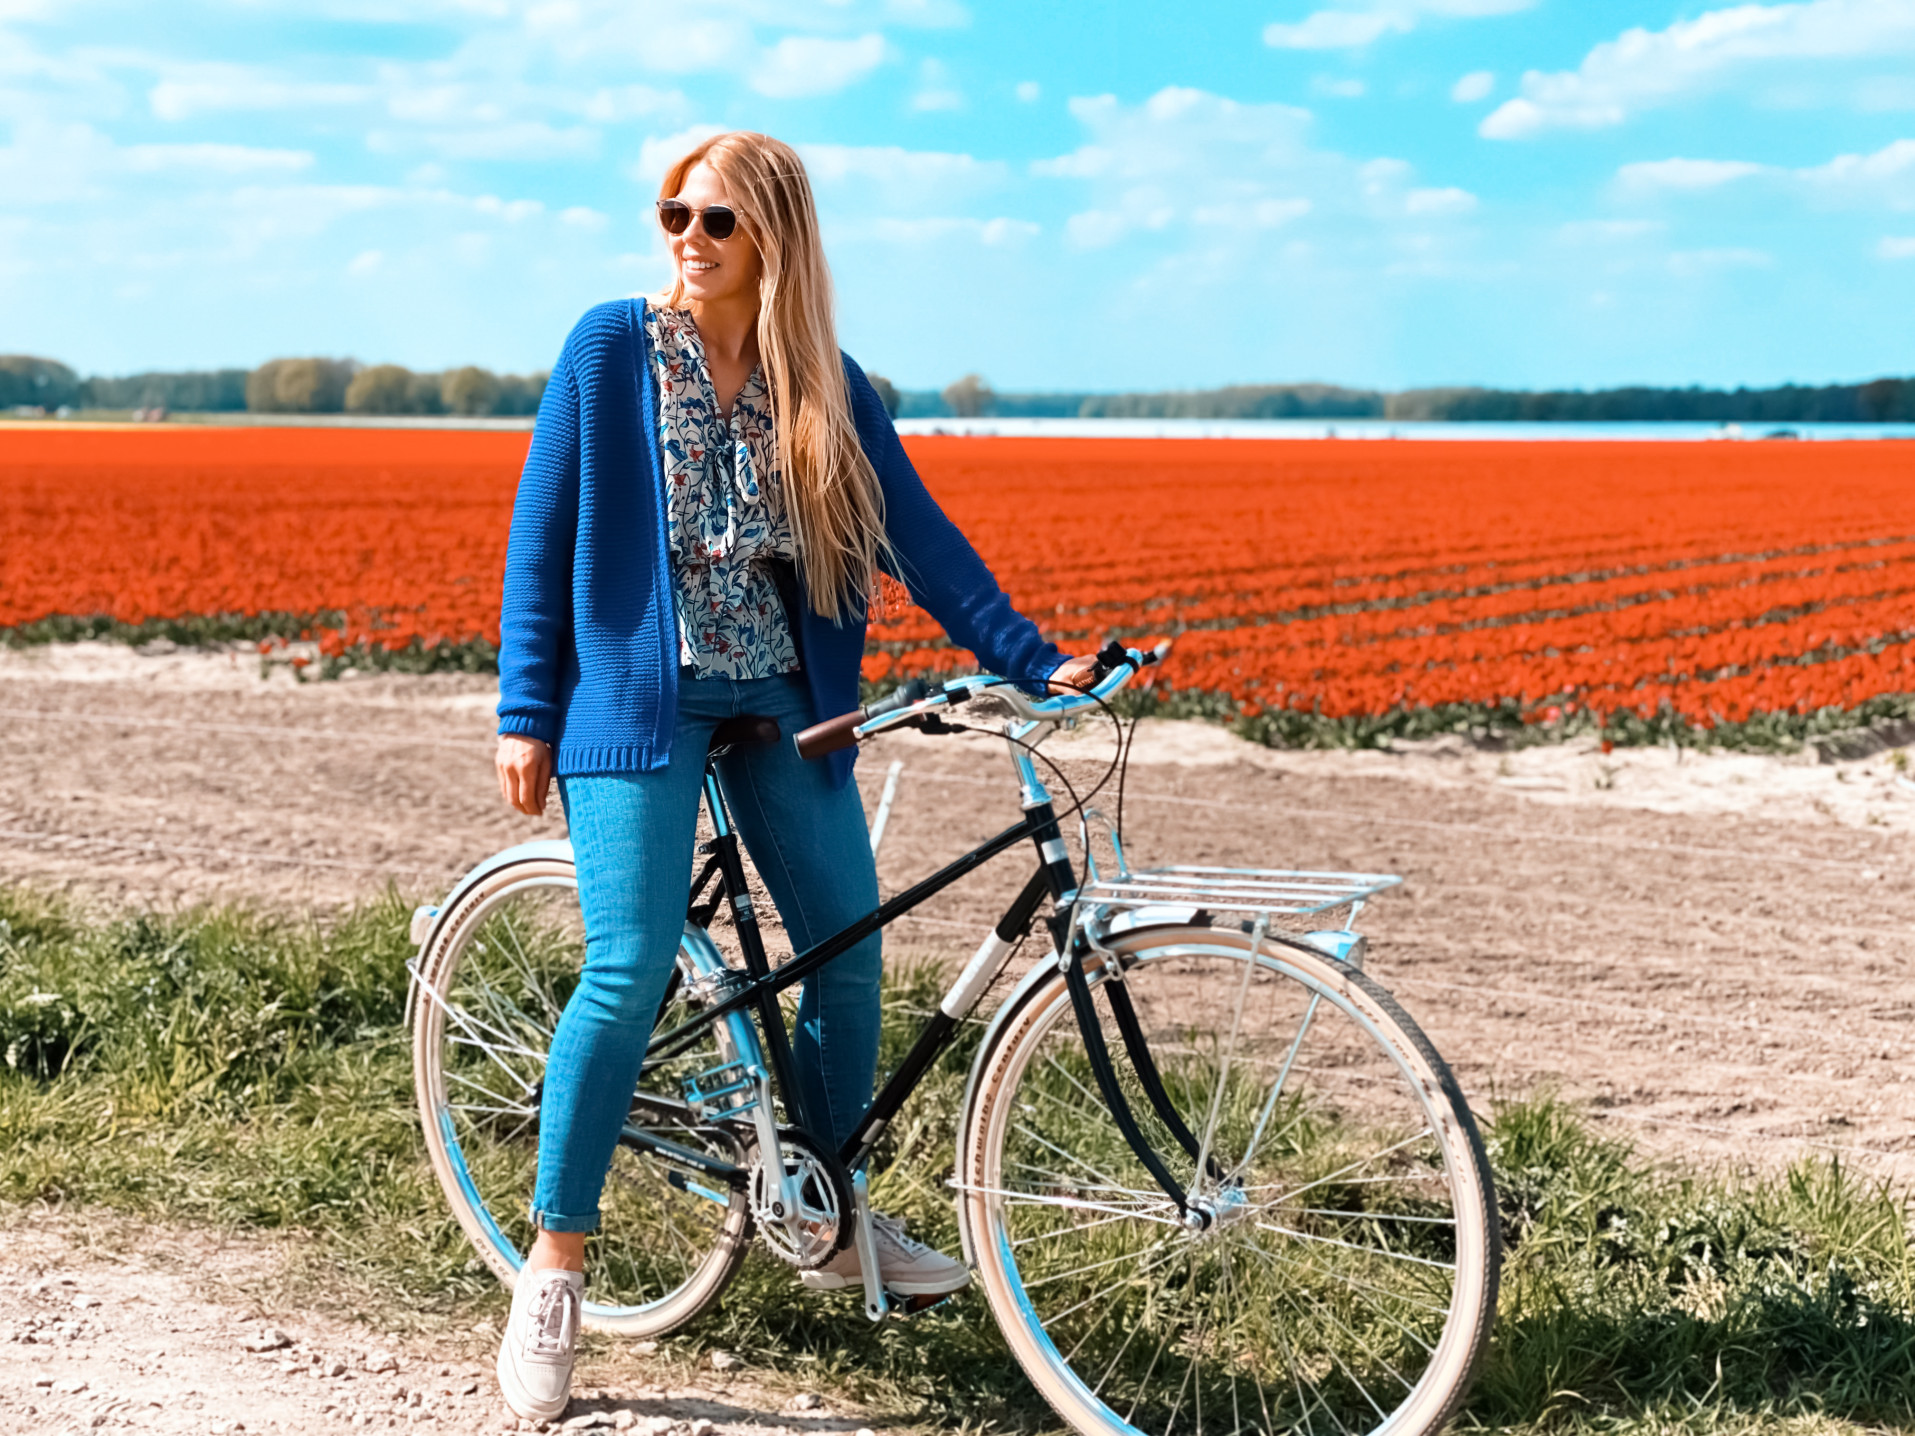 Woman Adult Blonde Hair Riding Bike Bicycle Dutch Bicycle Roadster Nostalgic Bicycle Vintage Bike T20 Vwxj93